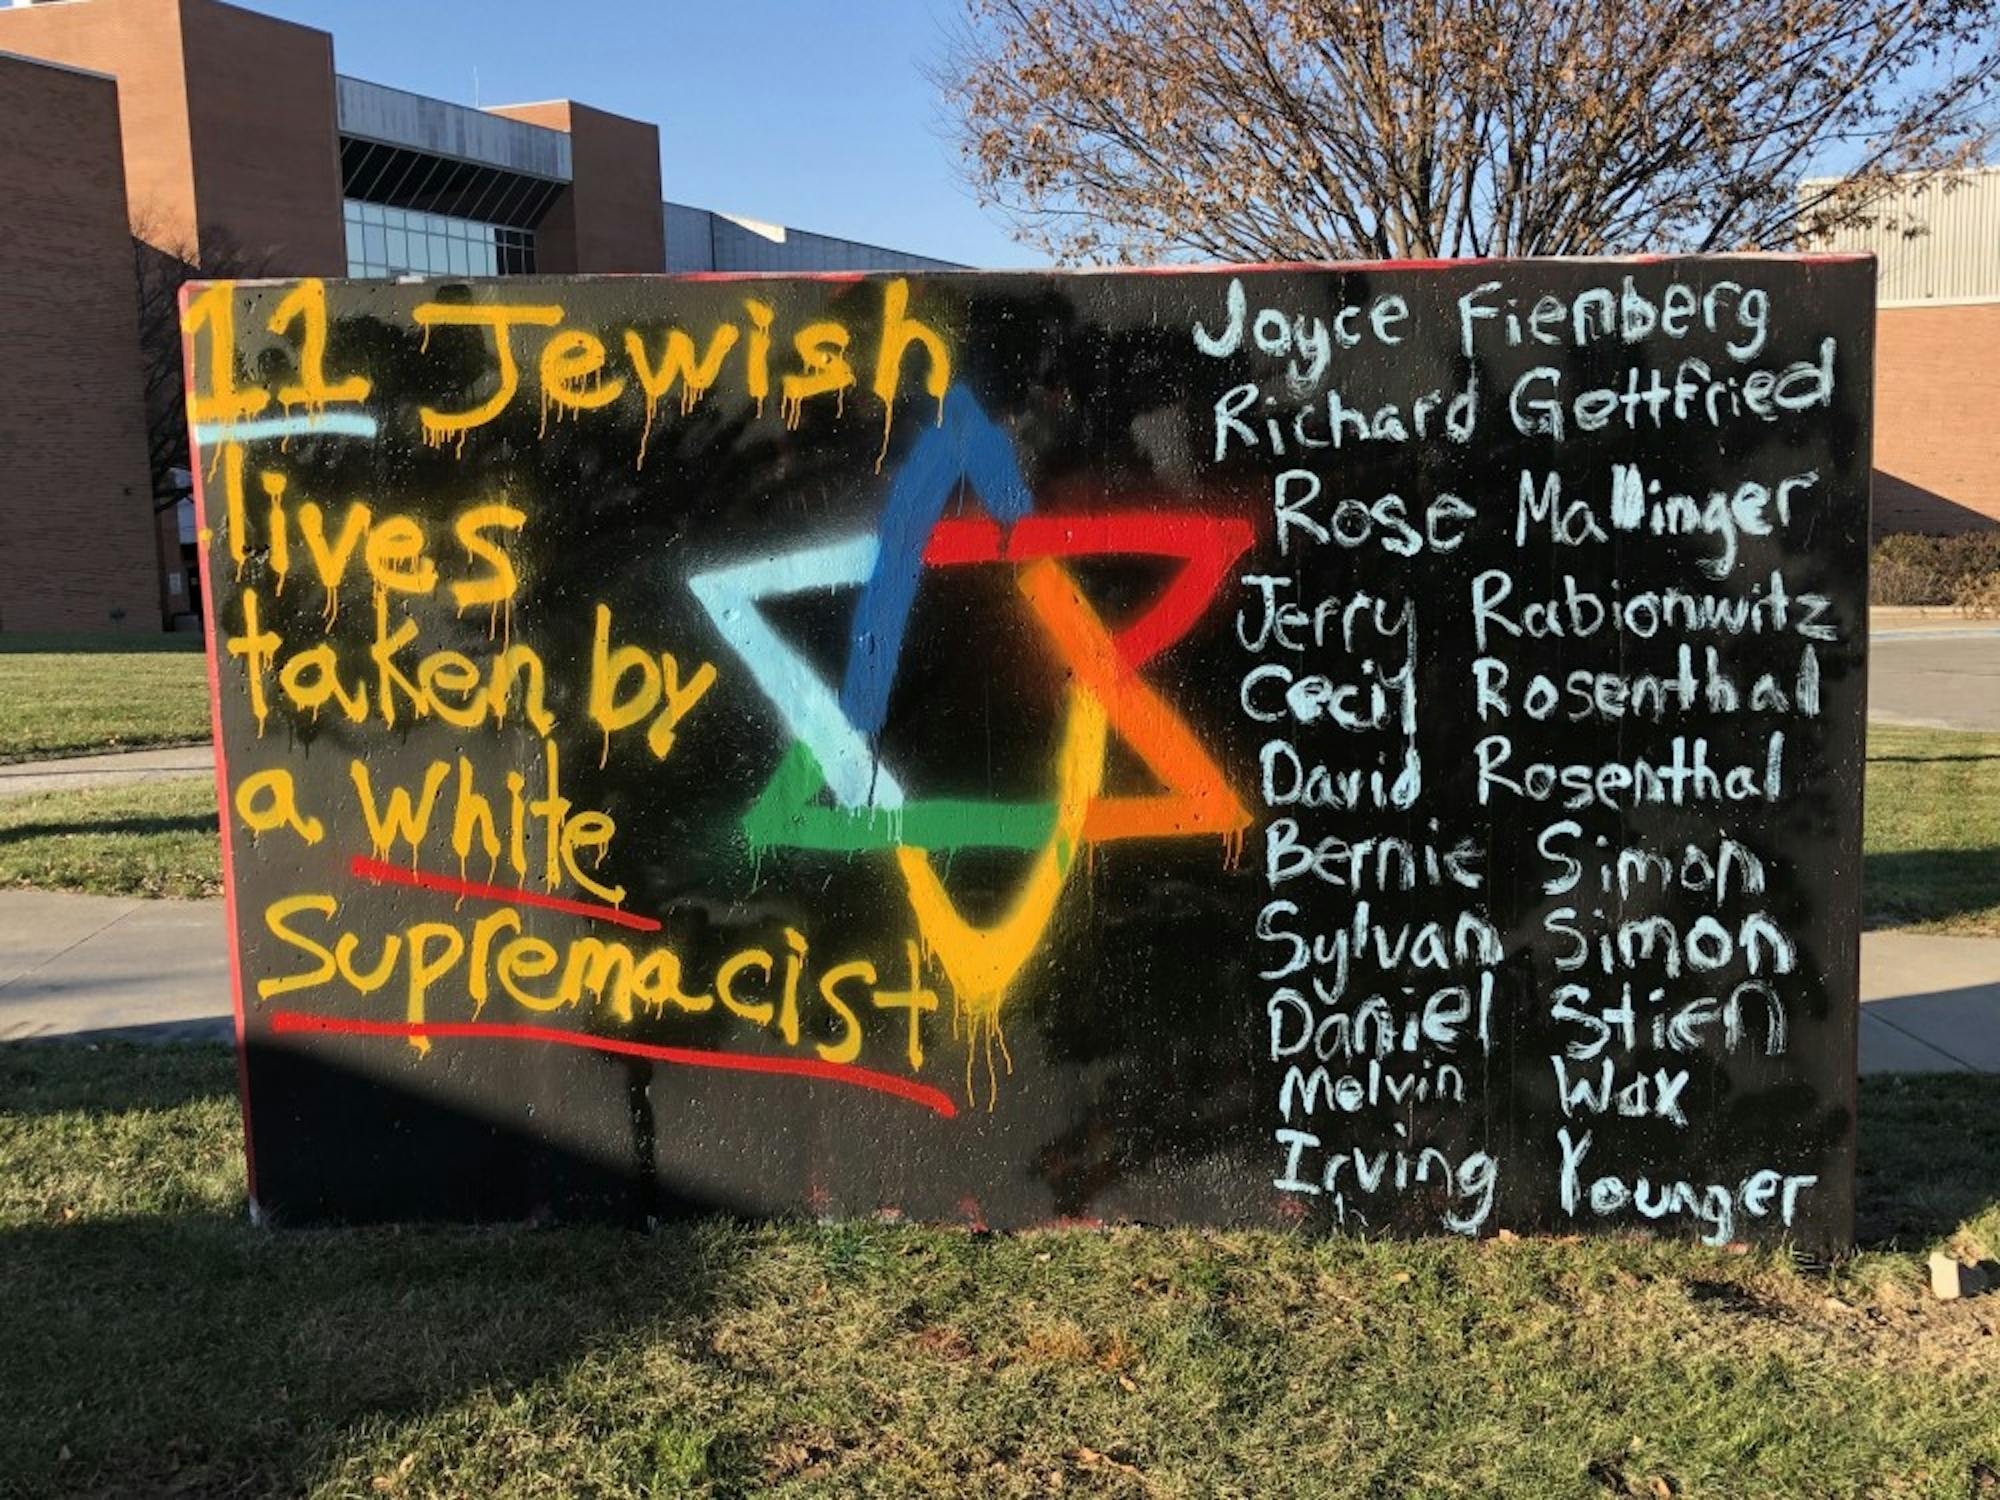 Jewish Lives Taken by a White Supremacist